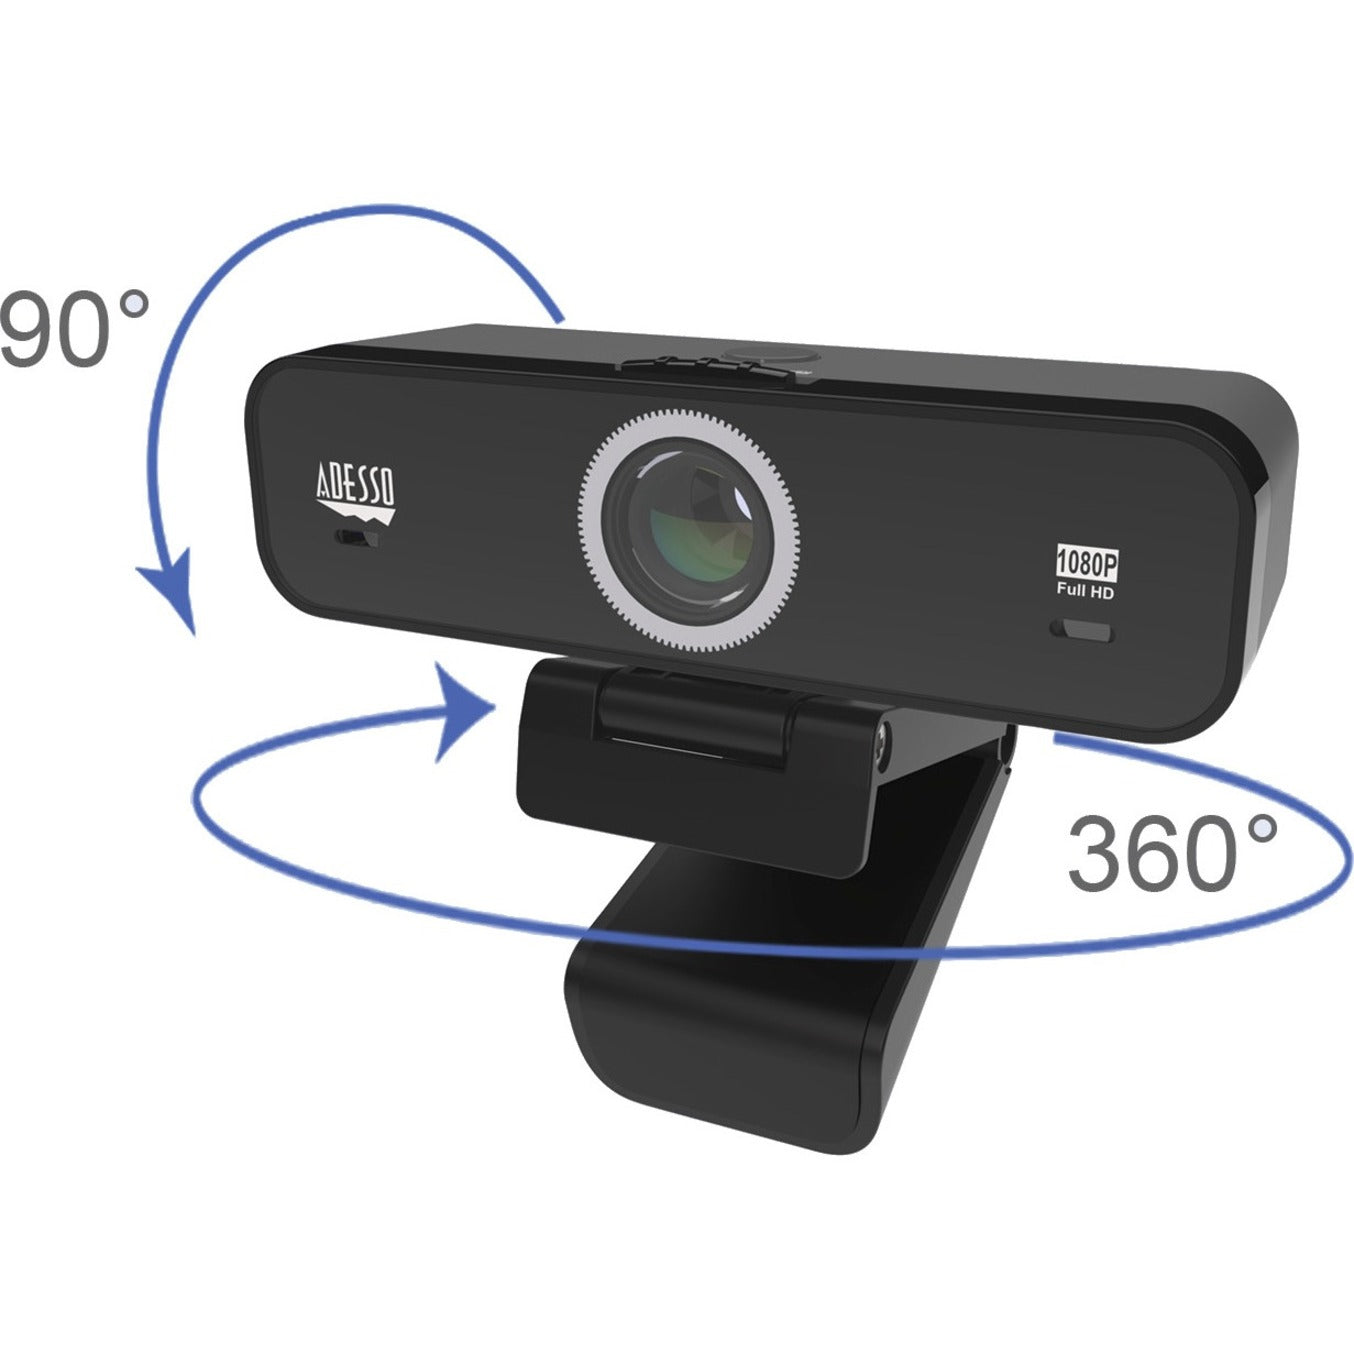 Adesso CyberTrack K1 Webcam - 2.1 Megapixel, 30 fps, USB 2.0